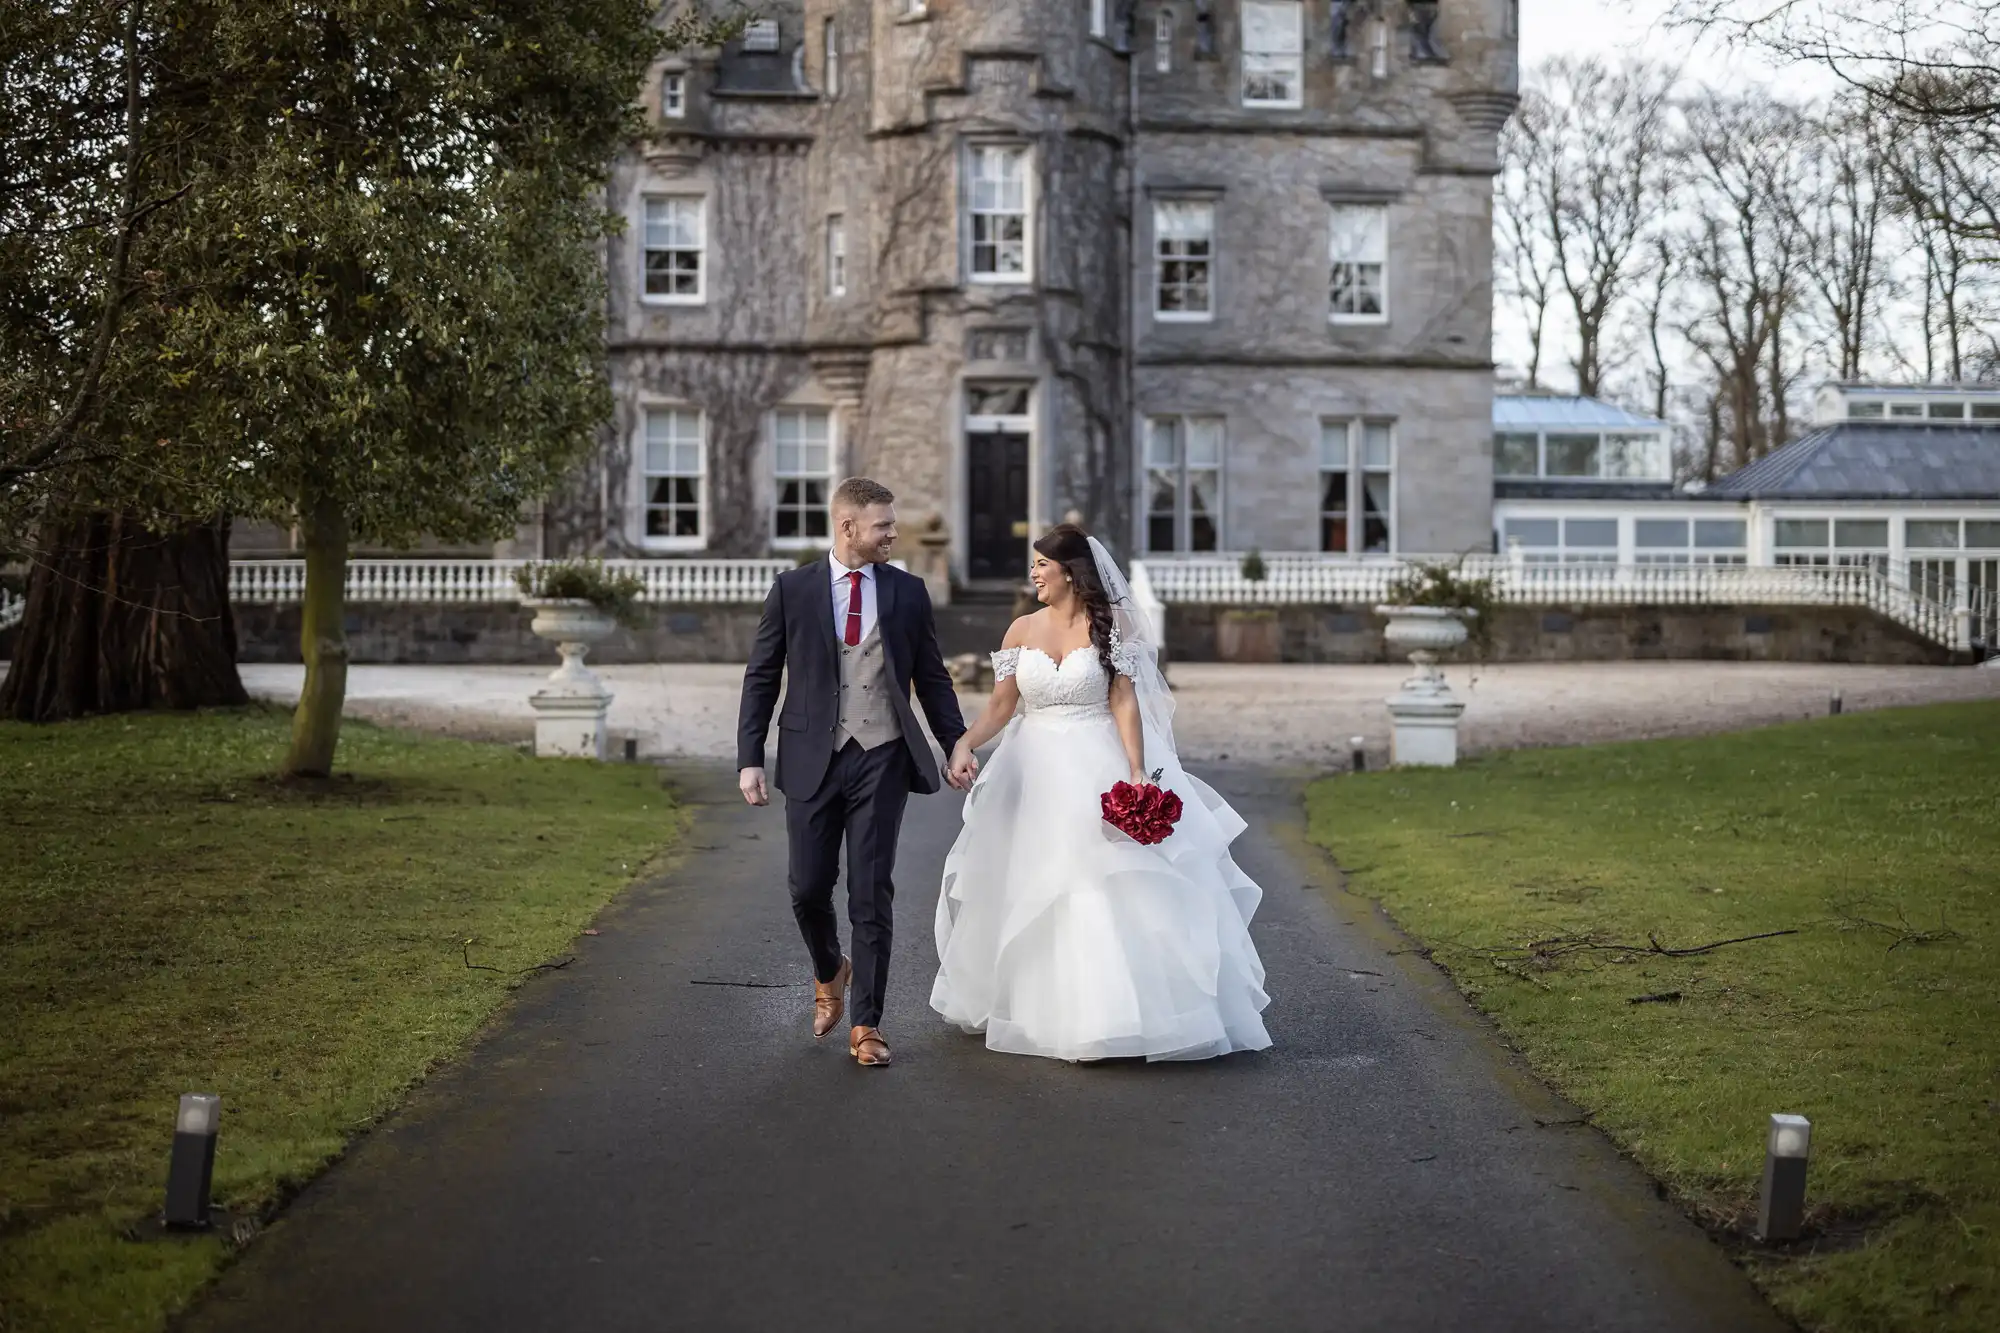 Carlowrie Castle wedding photos for Taylor and Brett’s fairy-tale celebration